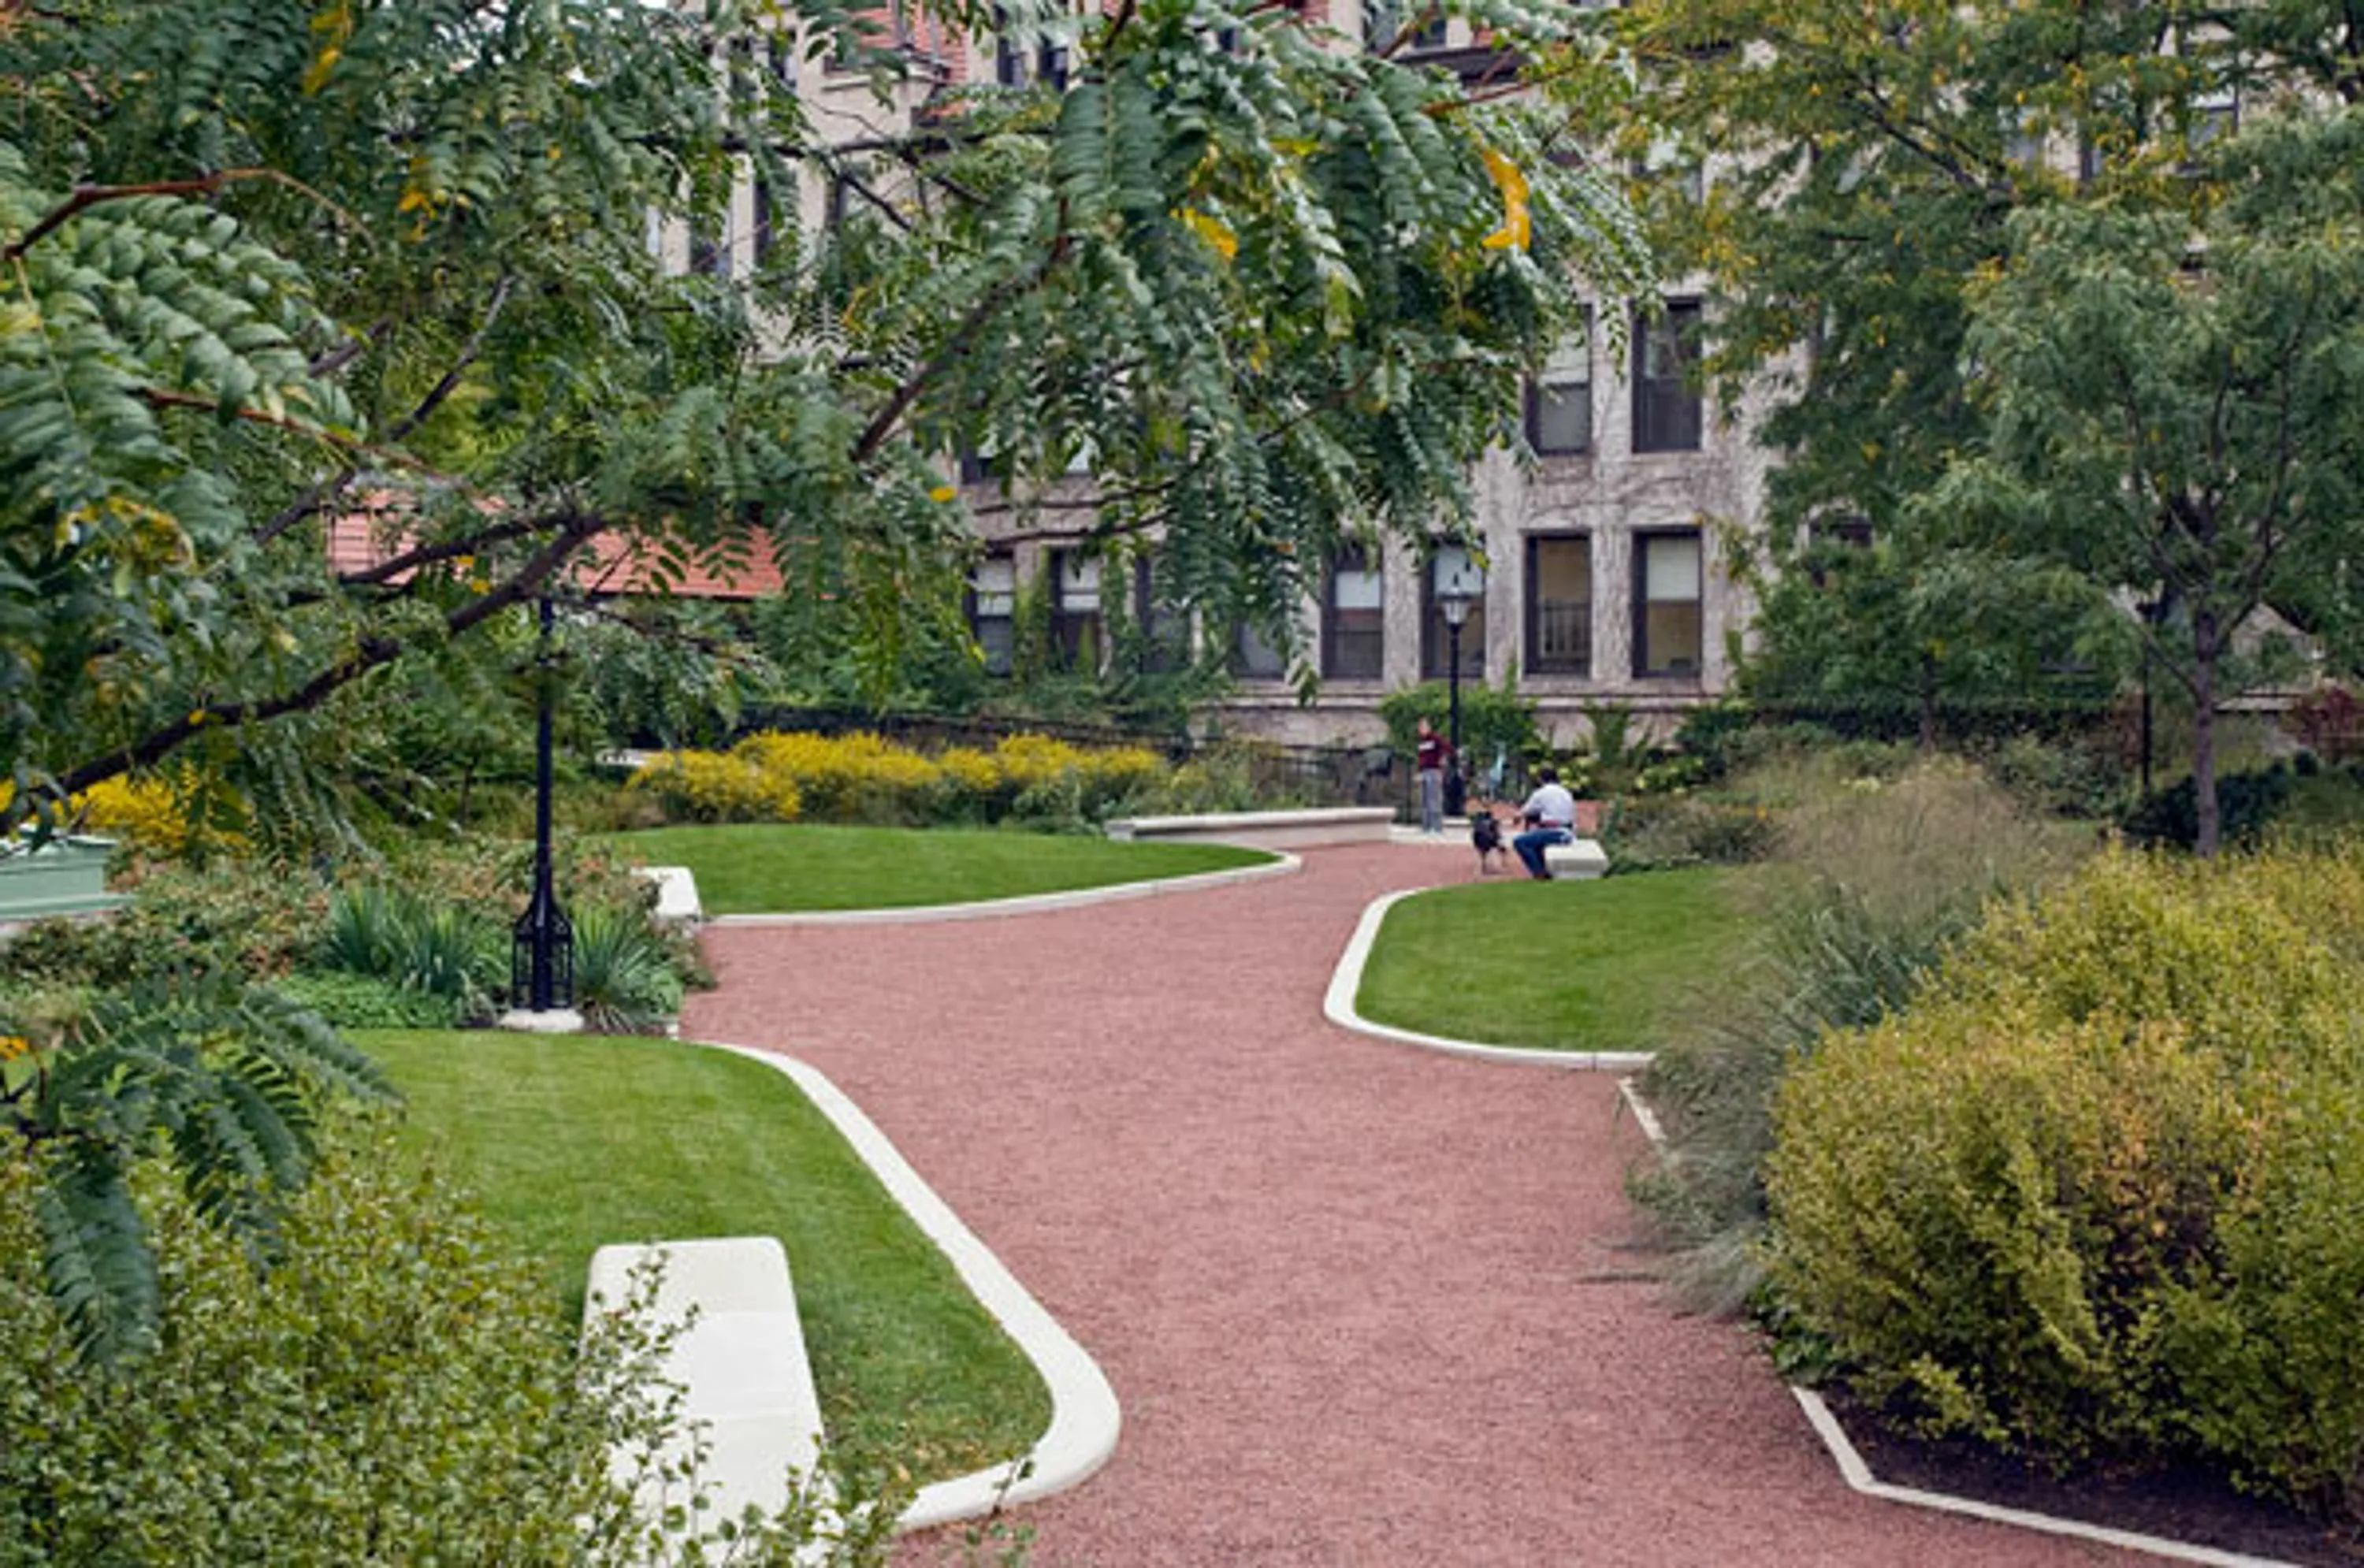 3 hull court garden gardens walkways university blog hoerrschaudt